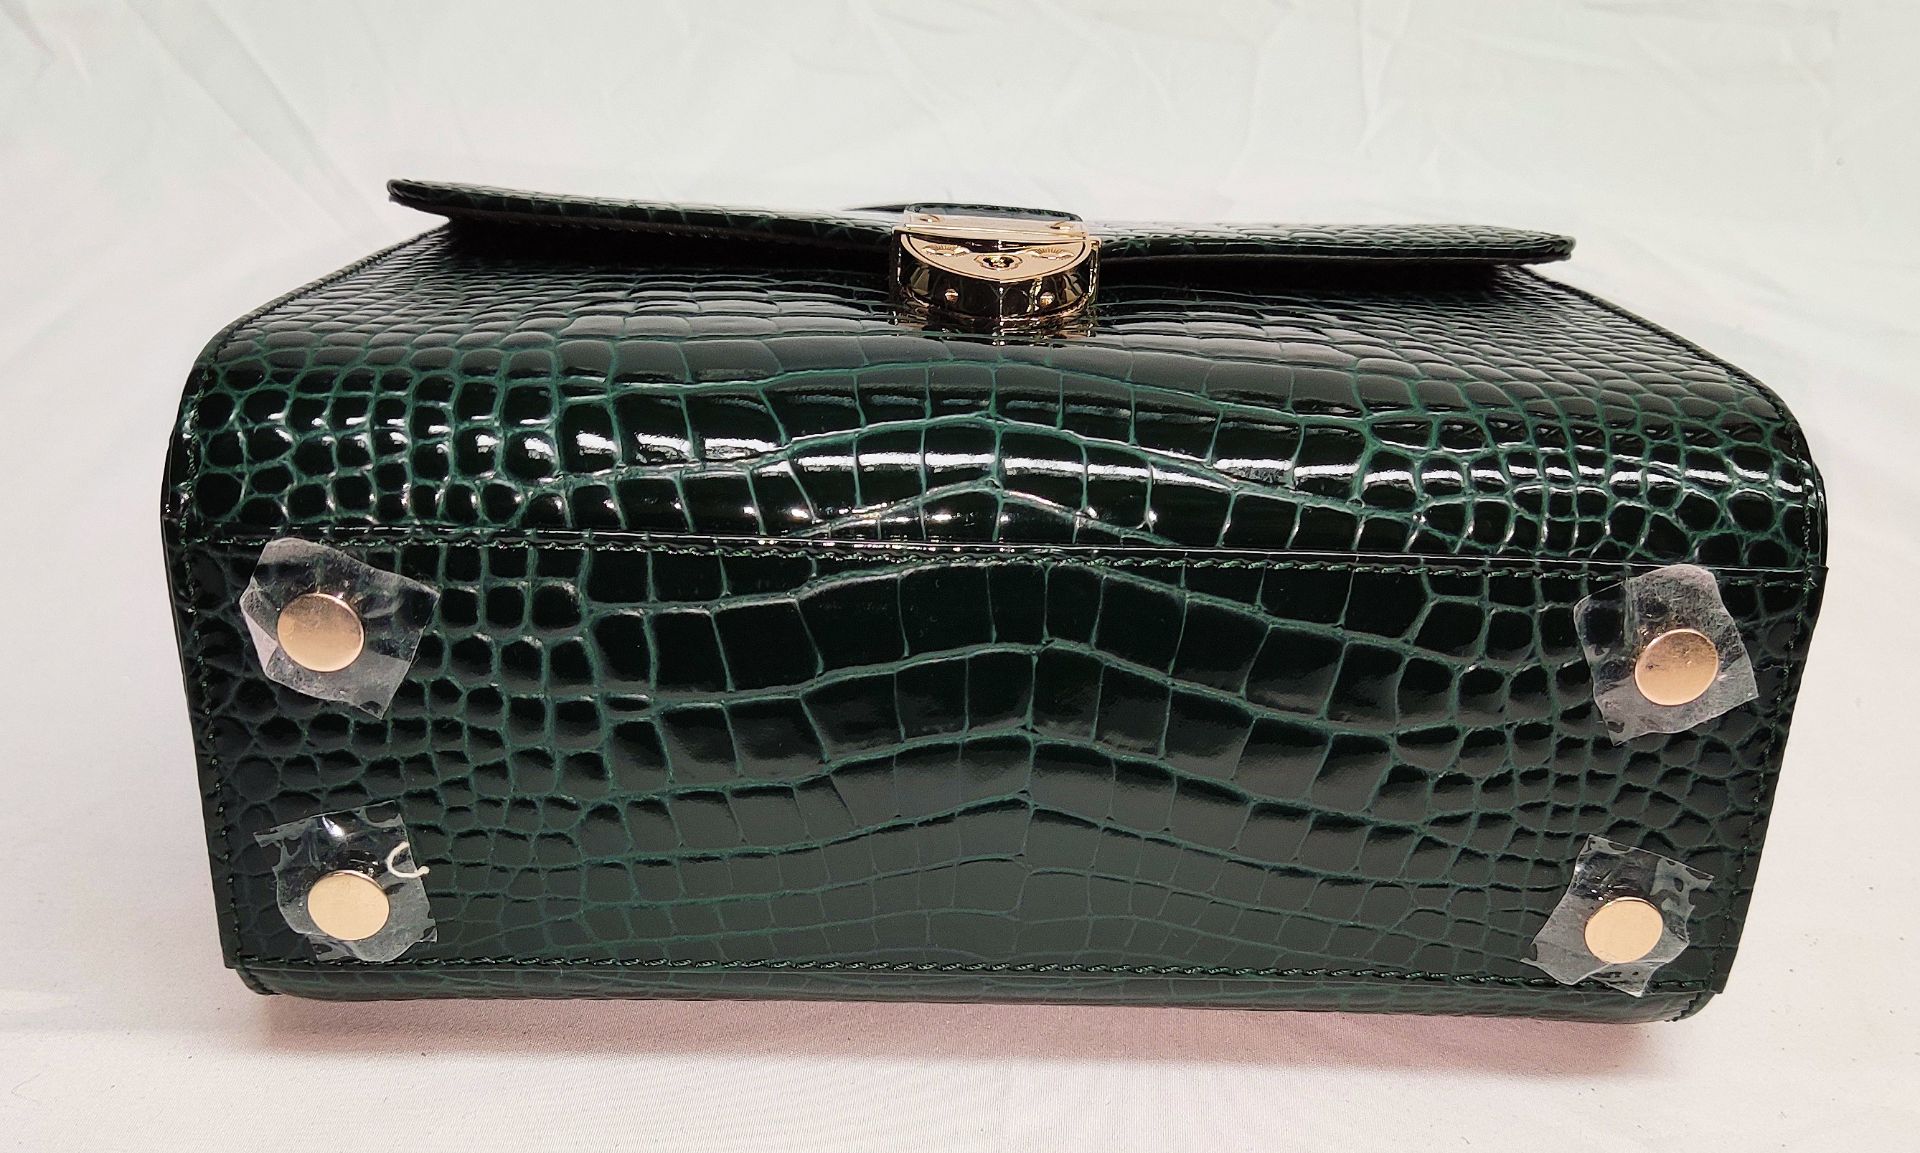 1 x ASPINAL OF LONDON Mayfair Bag - Evergreen Patent Croc - Original RRP £695.00 - Image 11 of 23